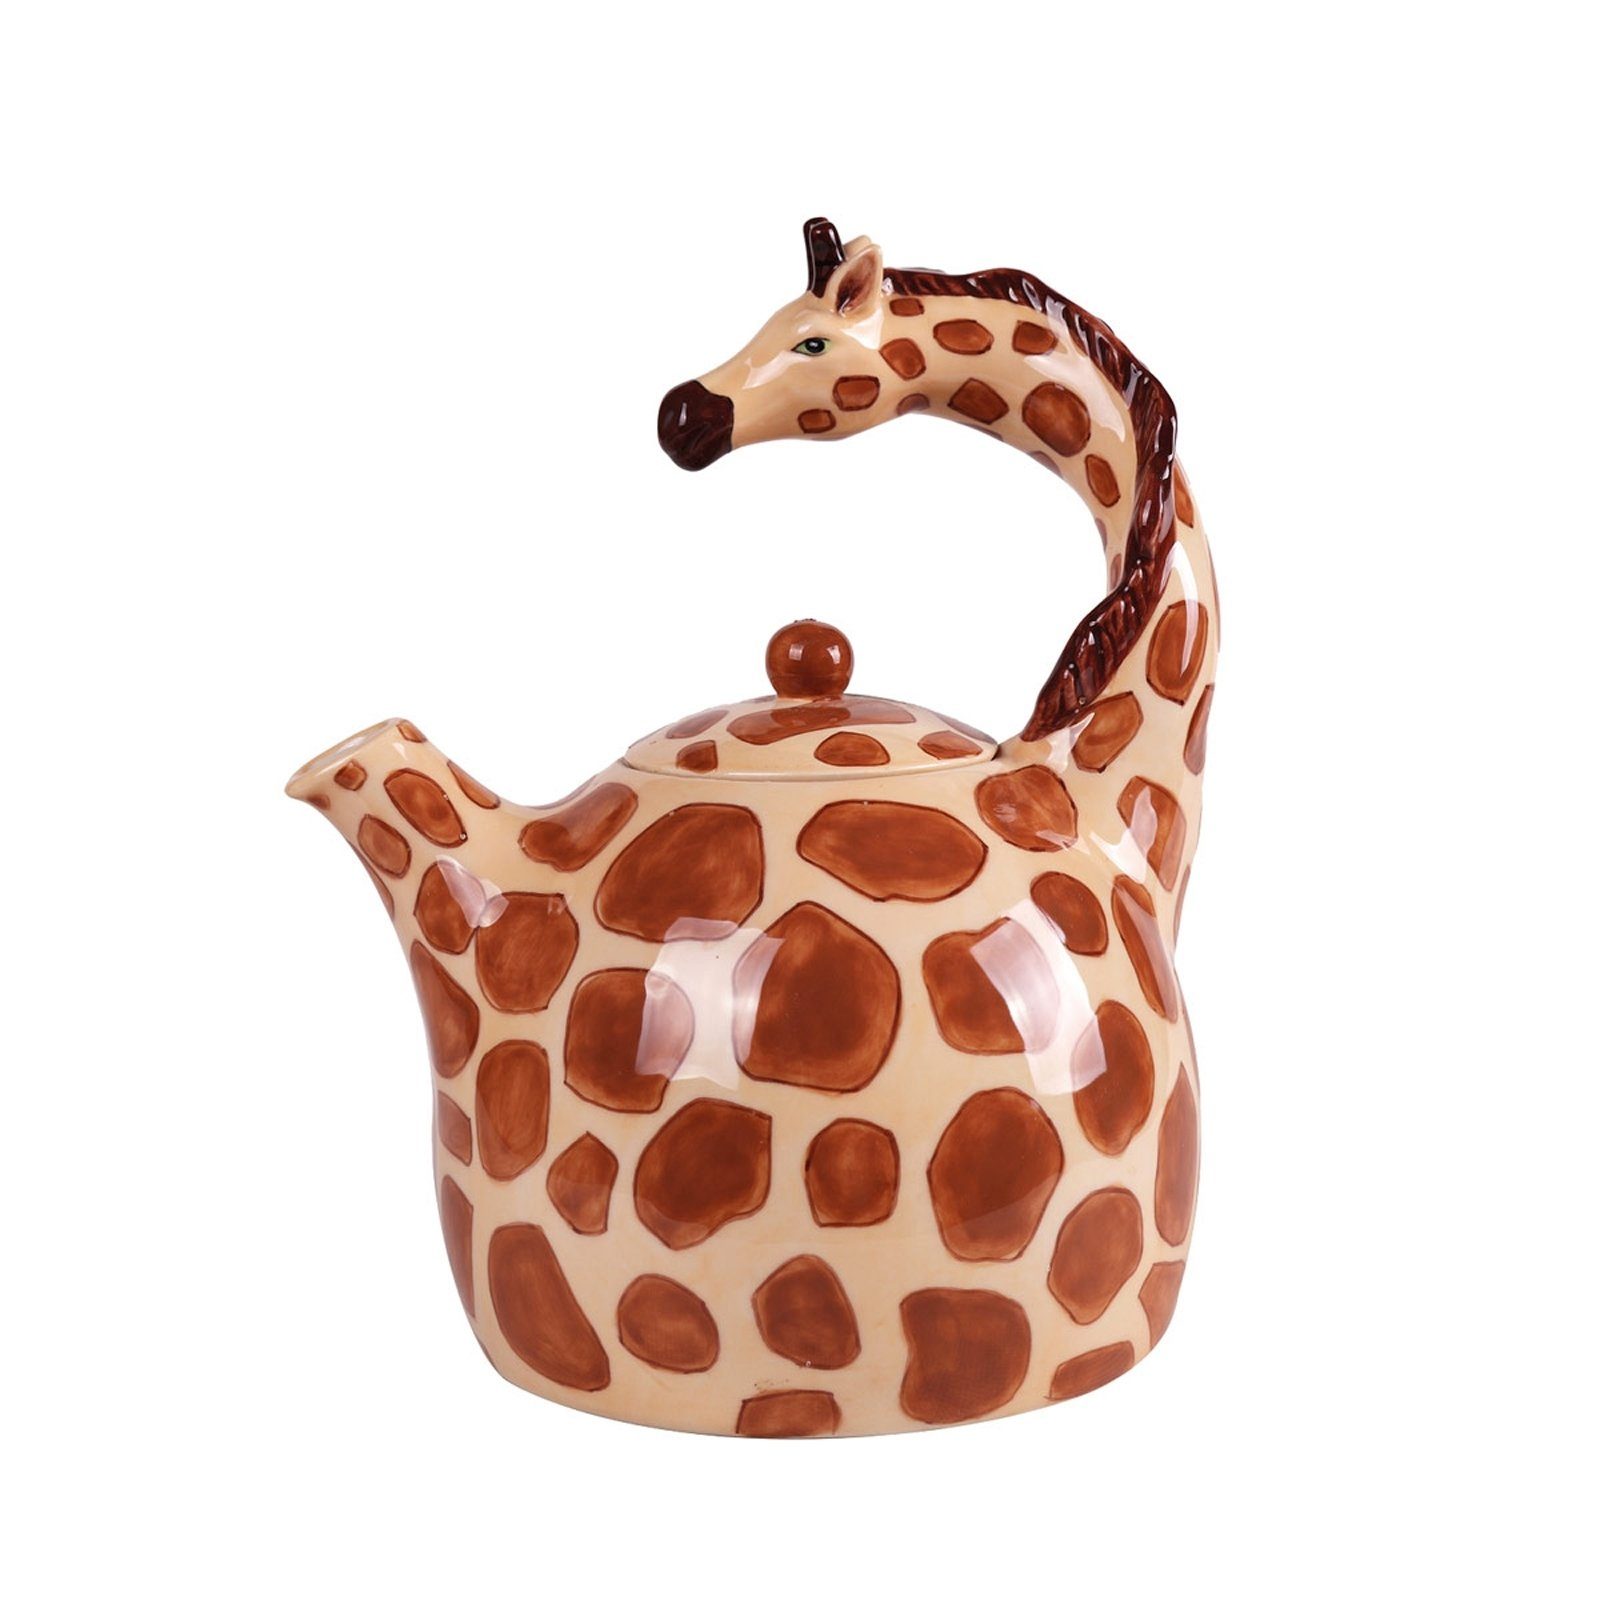 (Stück, Giraffe Porzellan Teekanne Design-Kanne Tailor Jameson 1.2 + Giraffe, braun Teekanne l, Stück),